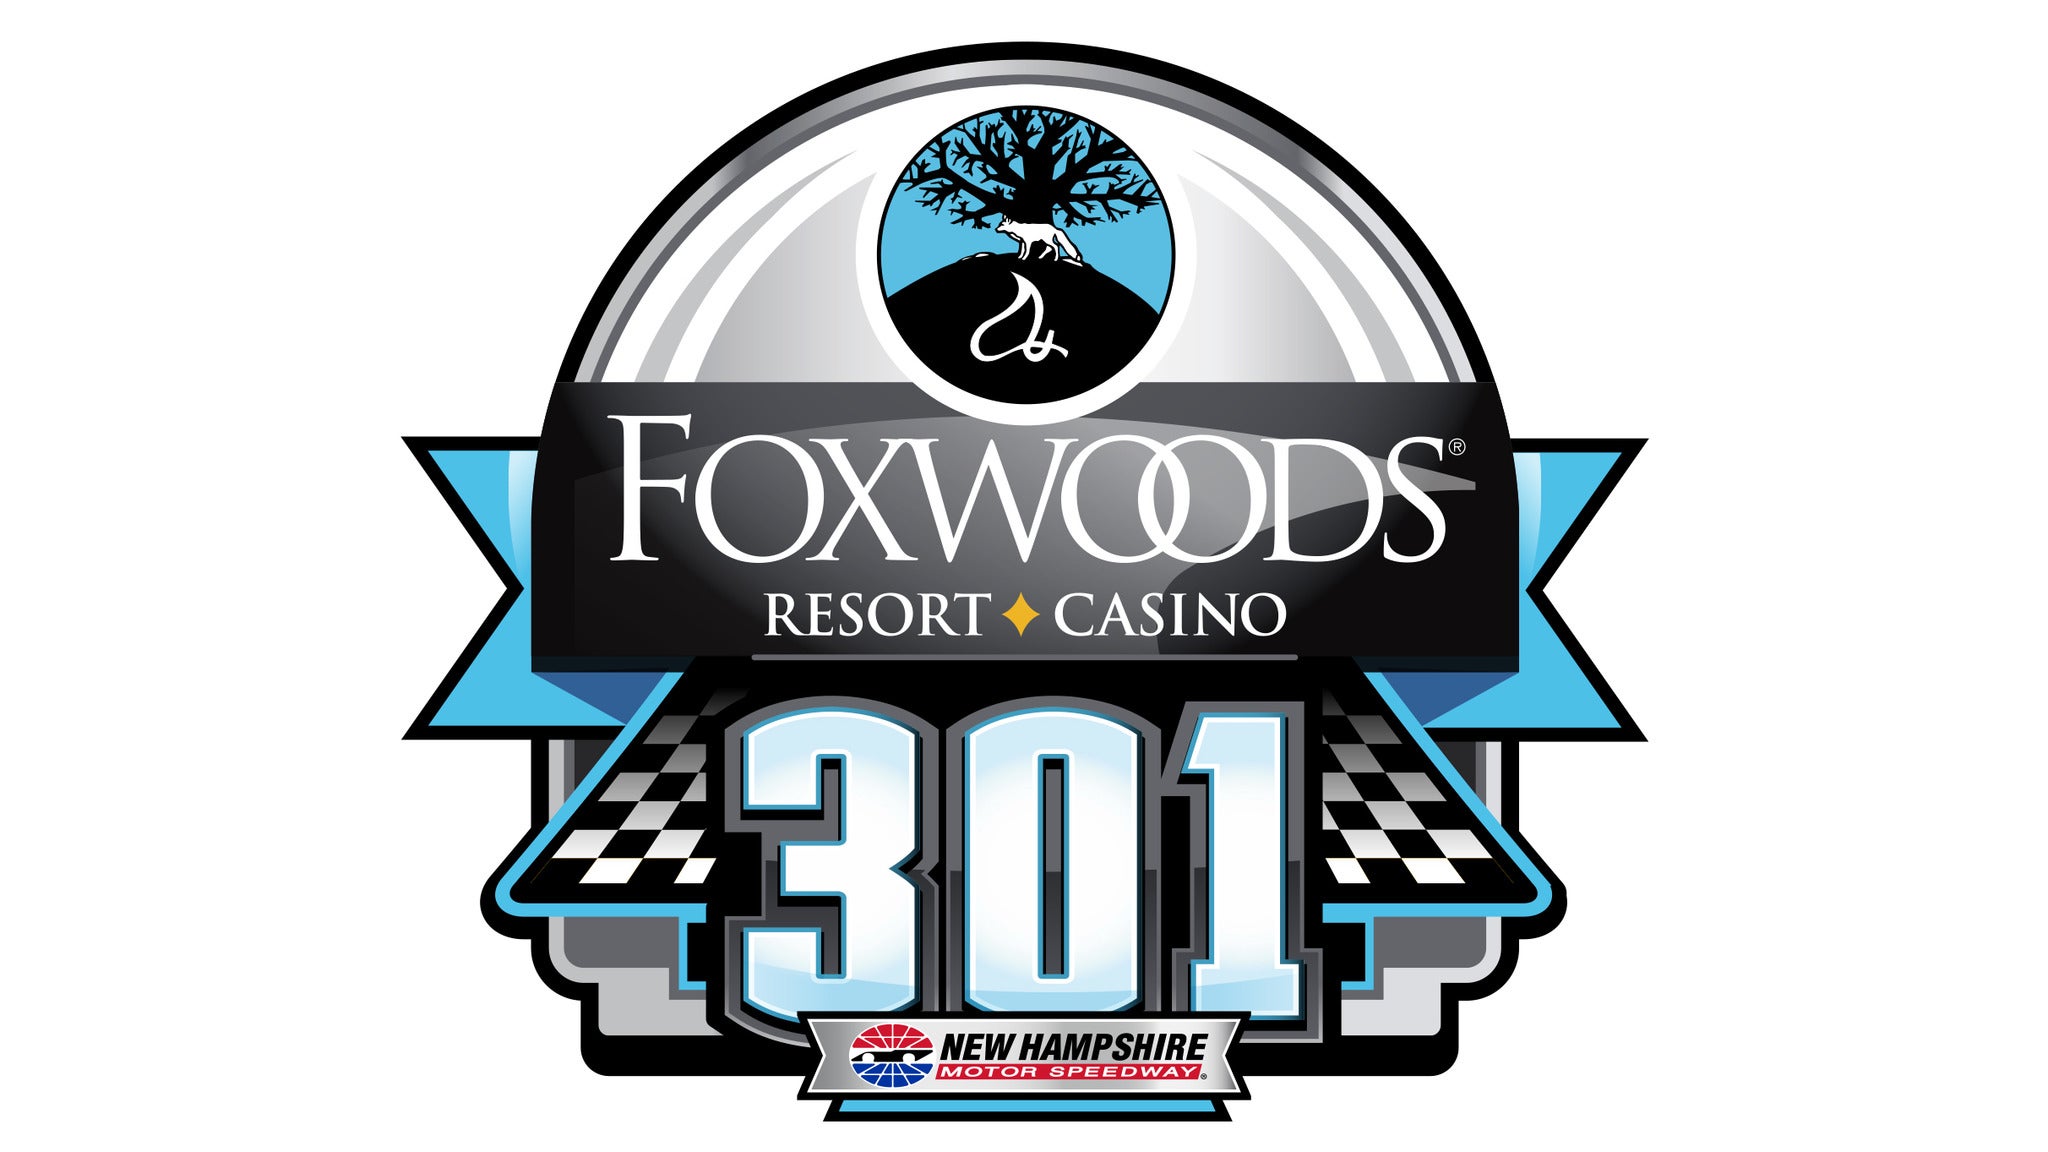 foxwoods online casino login